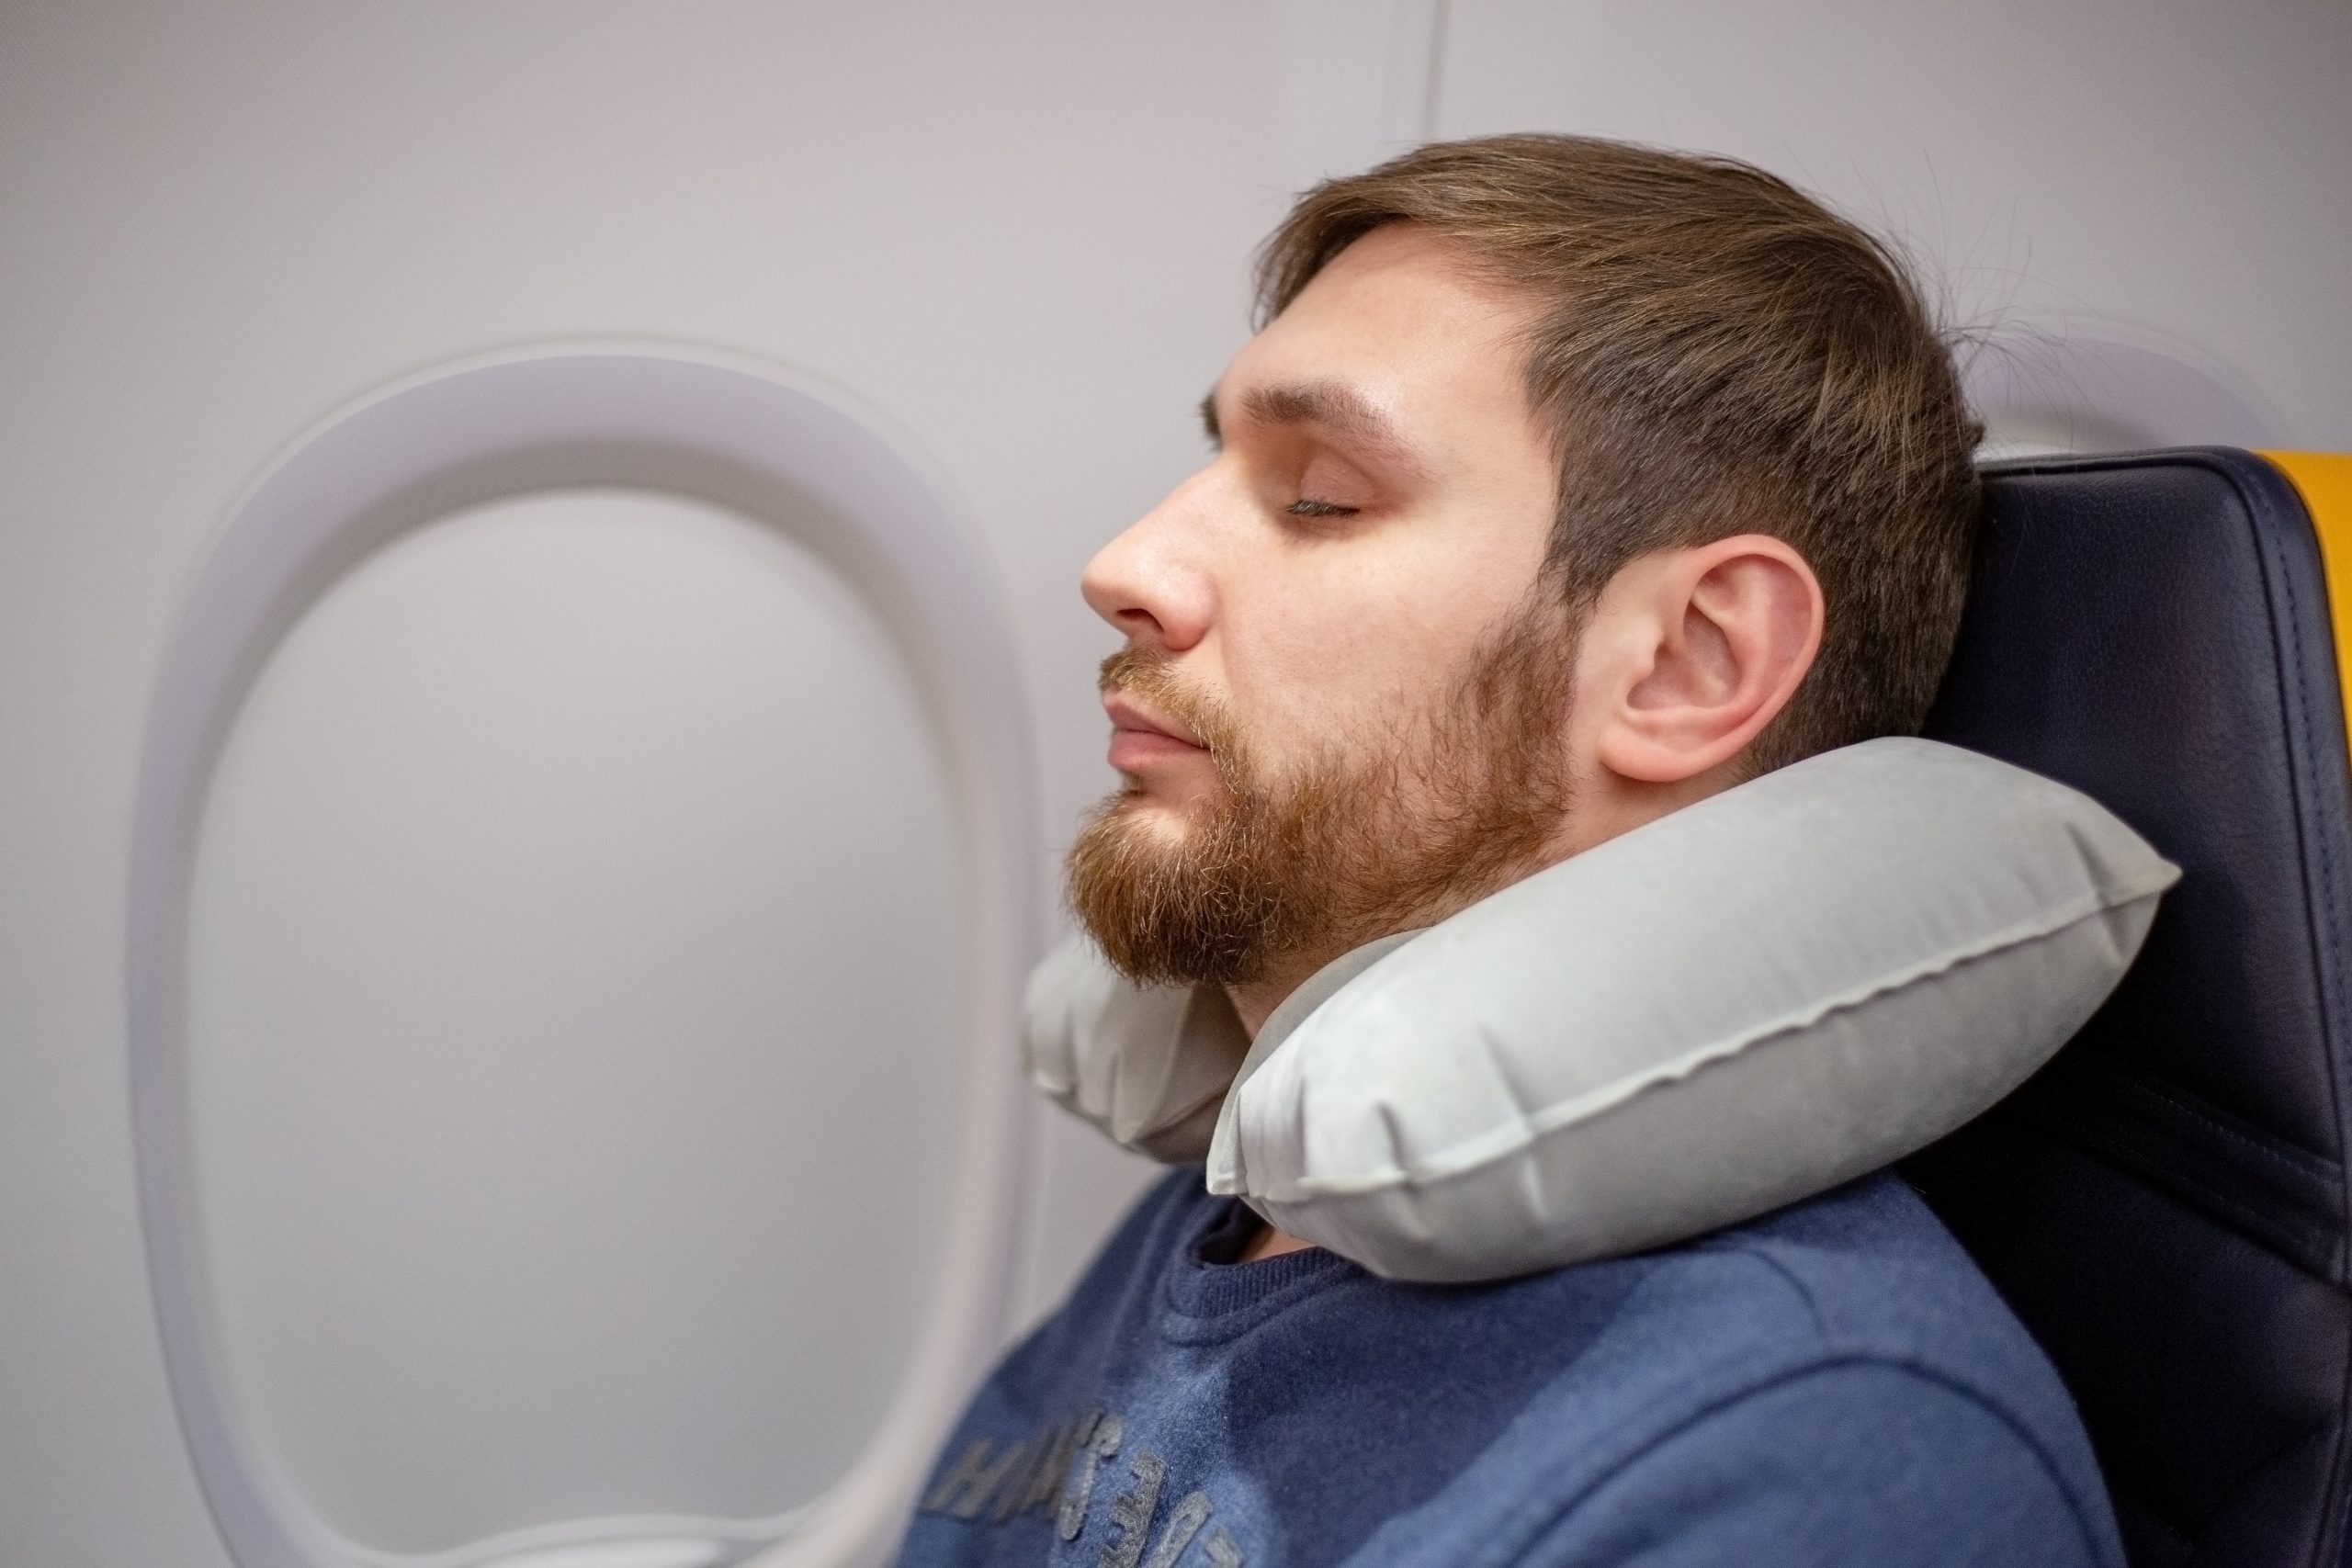 Susah tidur di pesawat atau kereta?  Atasi dengan tips ini